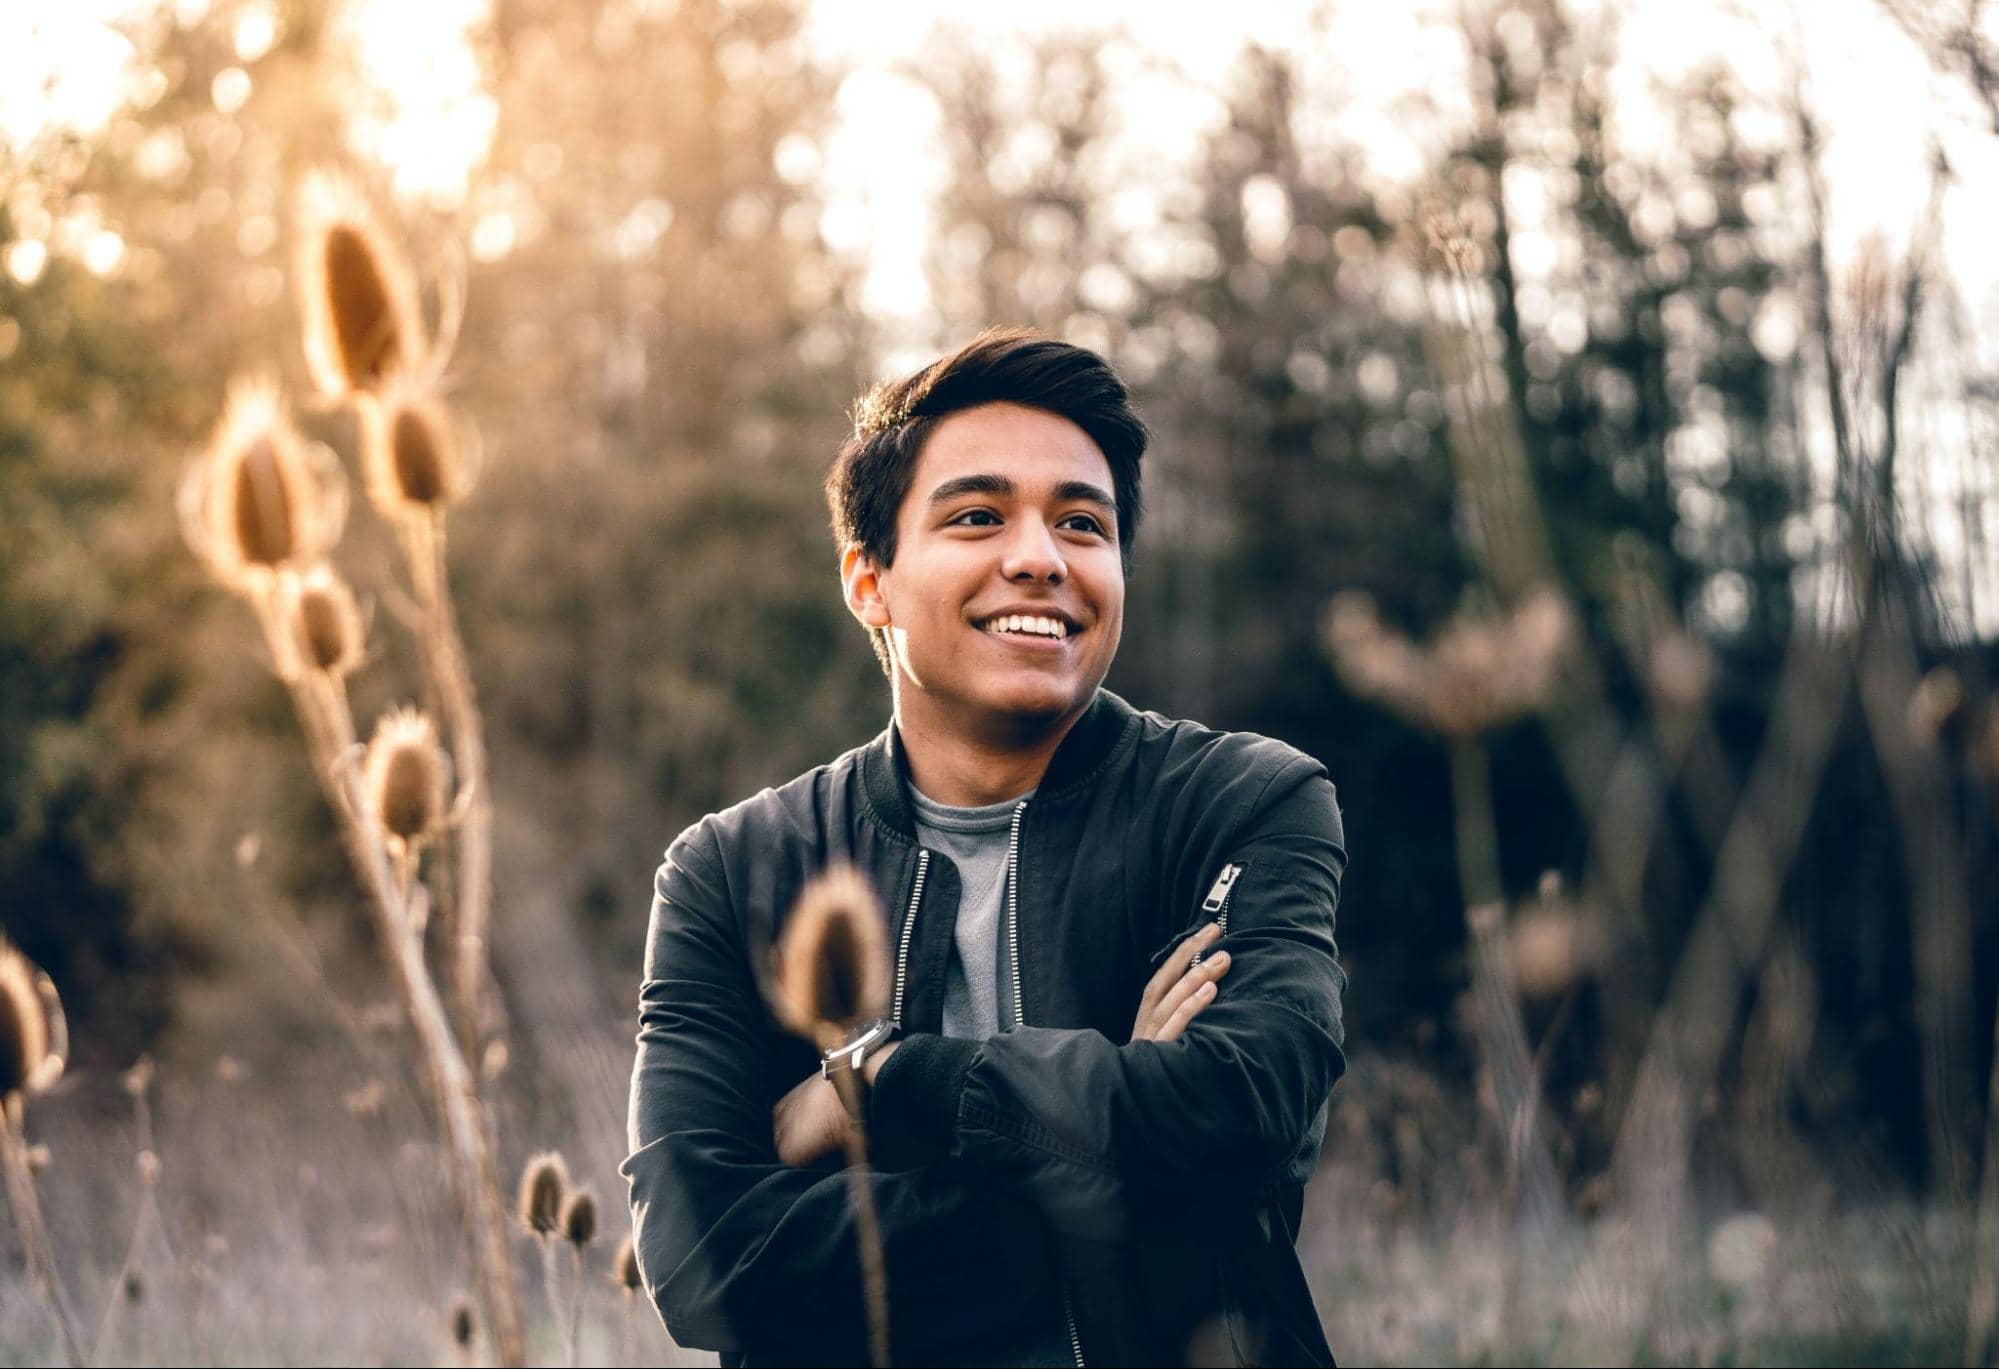 Man smiling among tall reeds